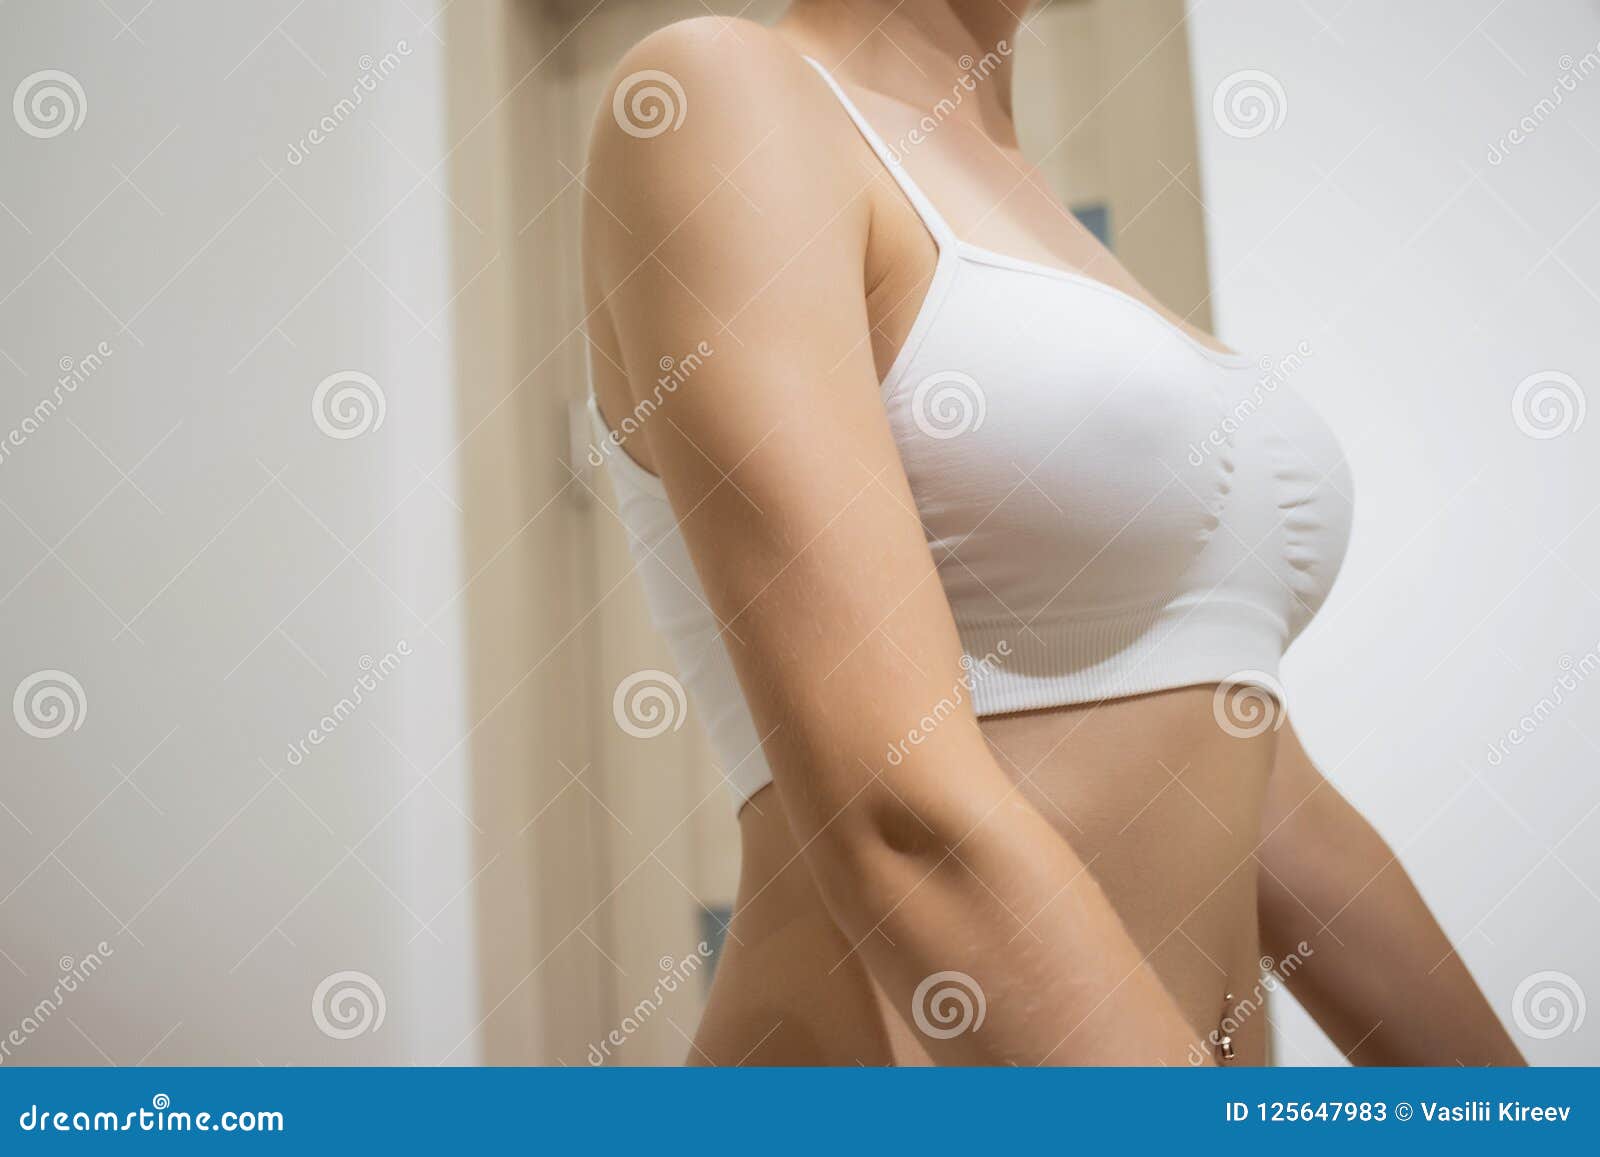 https://thumbs.dreamstime.com/z/crop-naked-woman-pulling-up-panties-unrecognizable-female-nude-breasts-pulling-up-white-panties-standing-bathroom-125647983.jpg